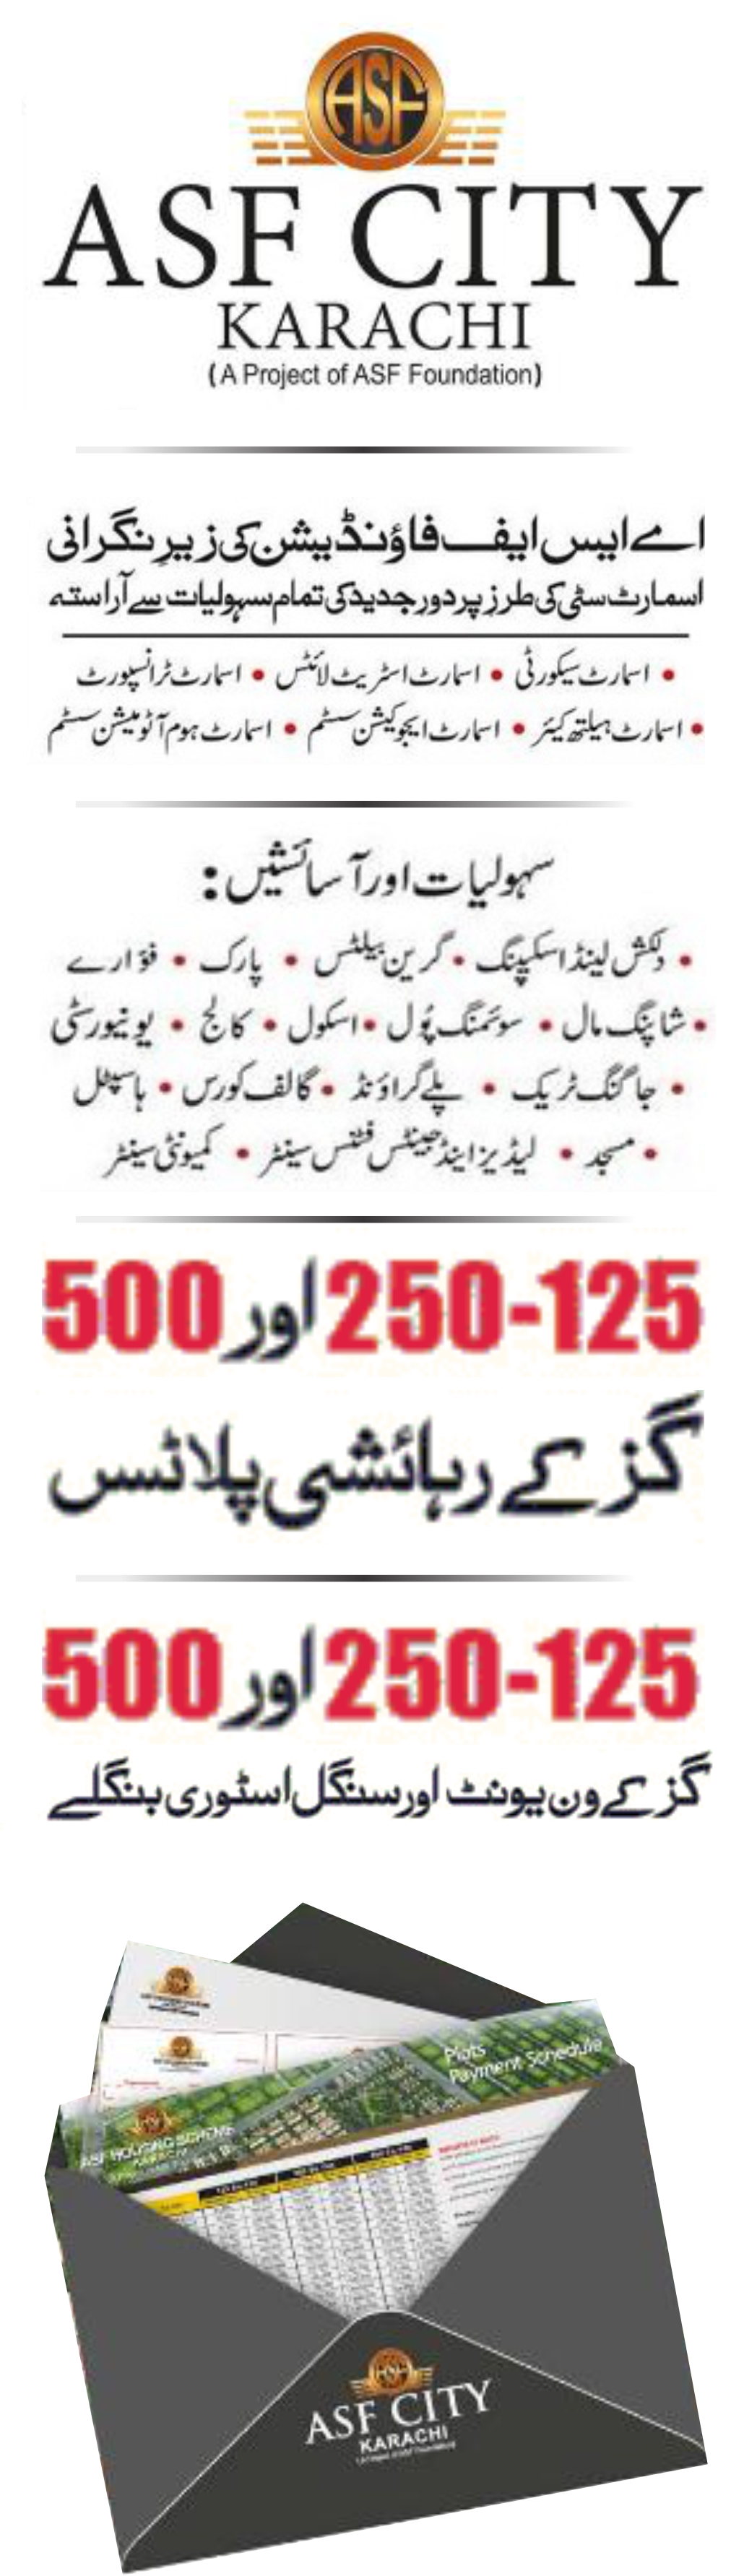 Get ASF City Karachi - Booking